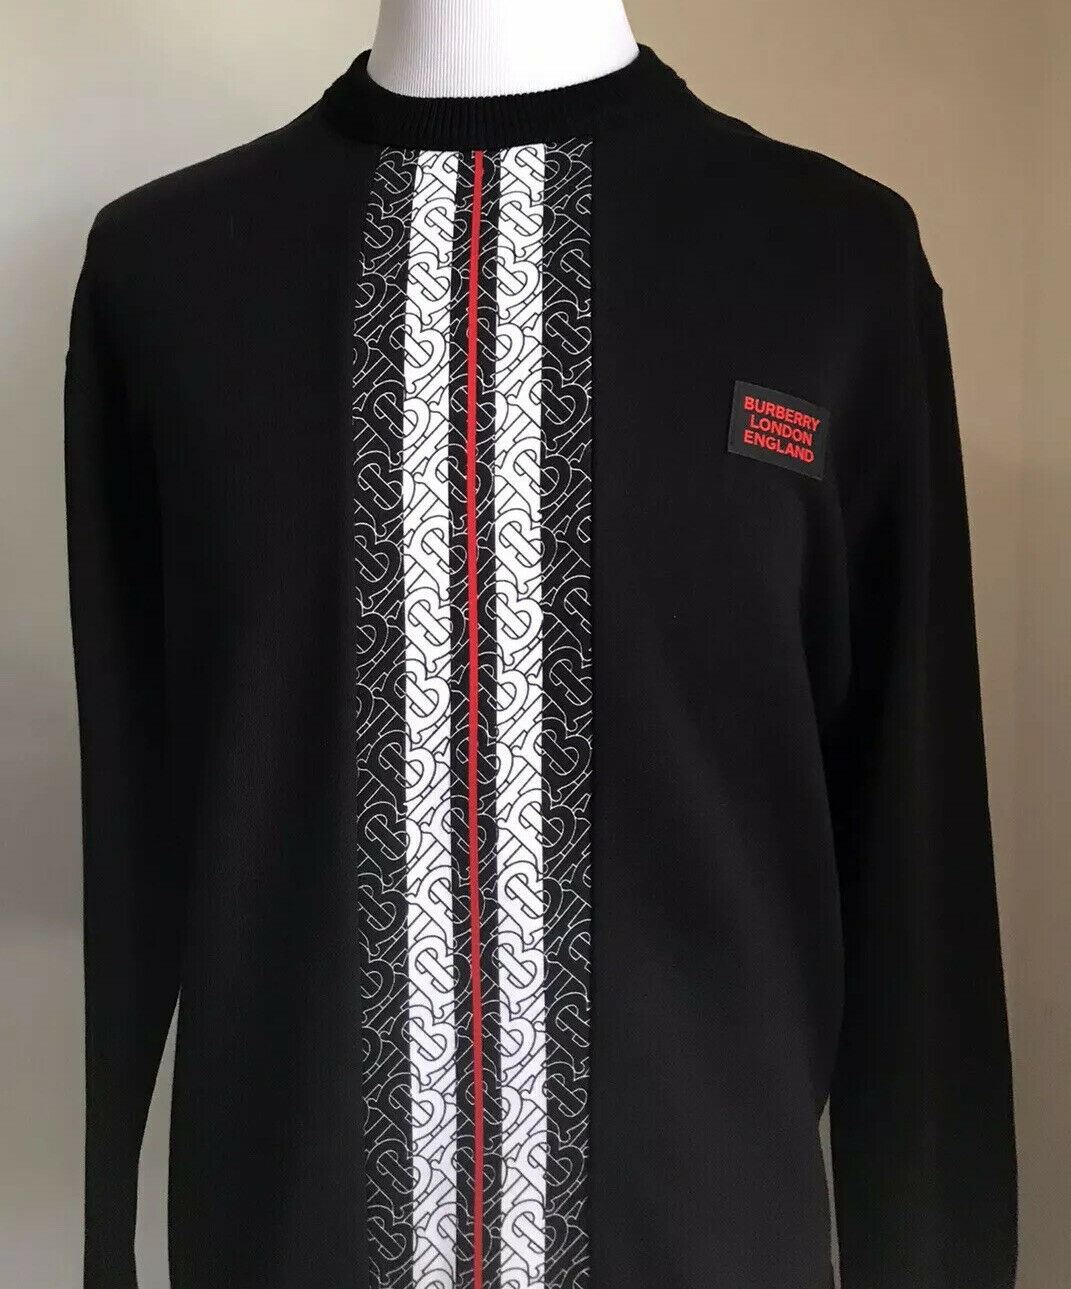 Neu $650 Burberry Men Solid Sweatshirt With TB Mon Pullover Crewneck Black L